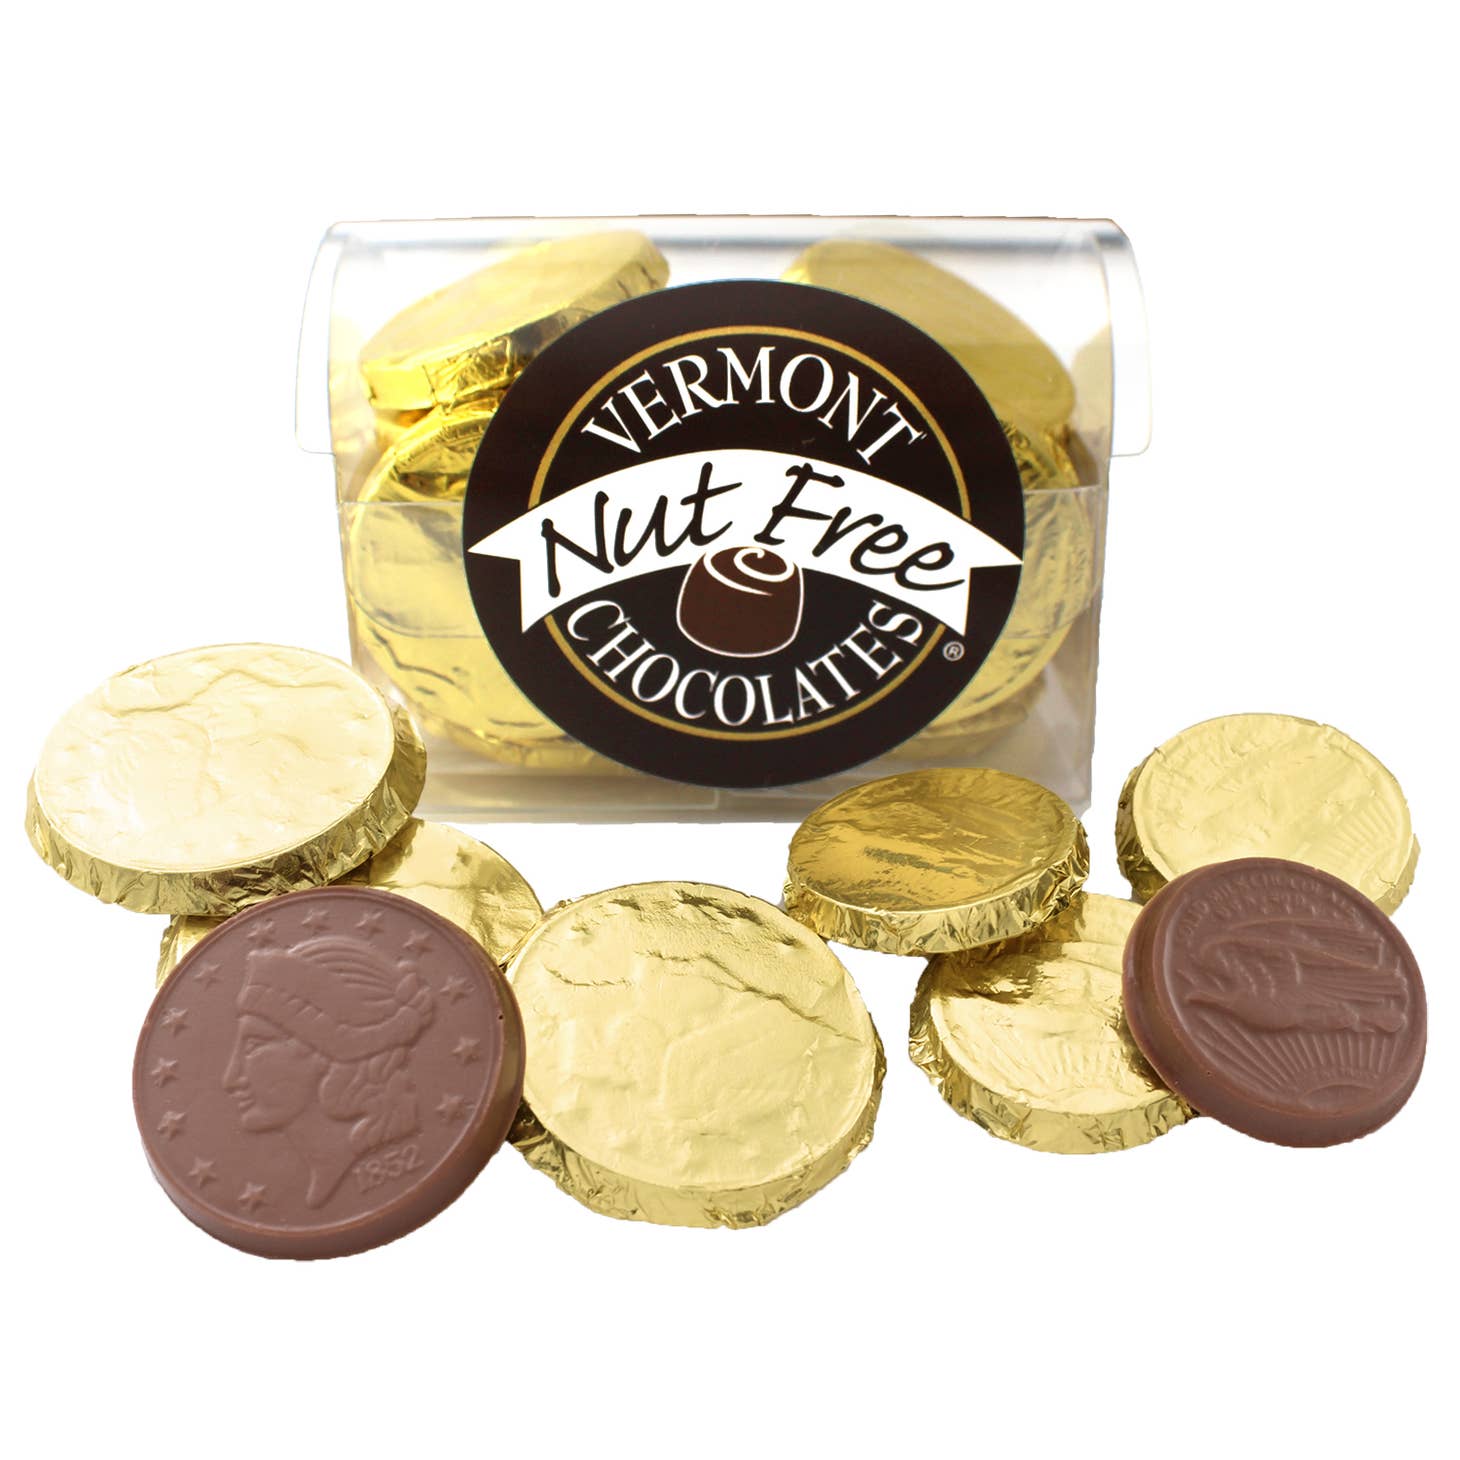 Vermont Nut Free Chocolates - Milk Chocolate Coins